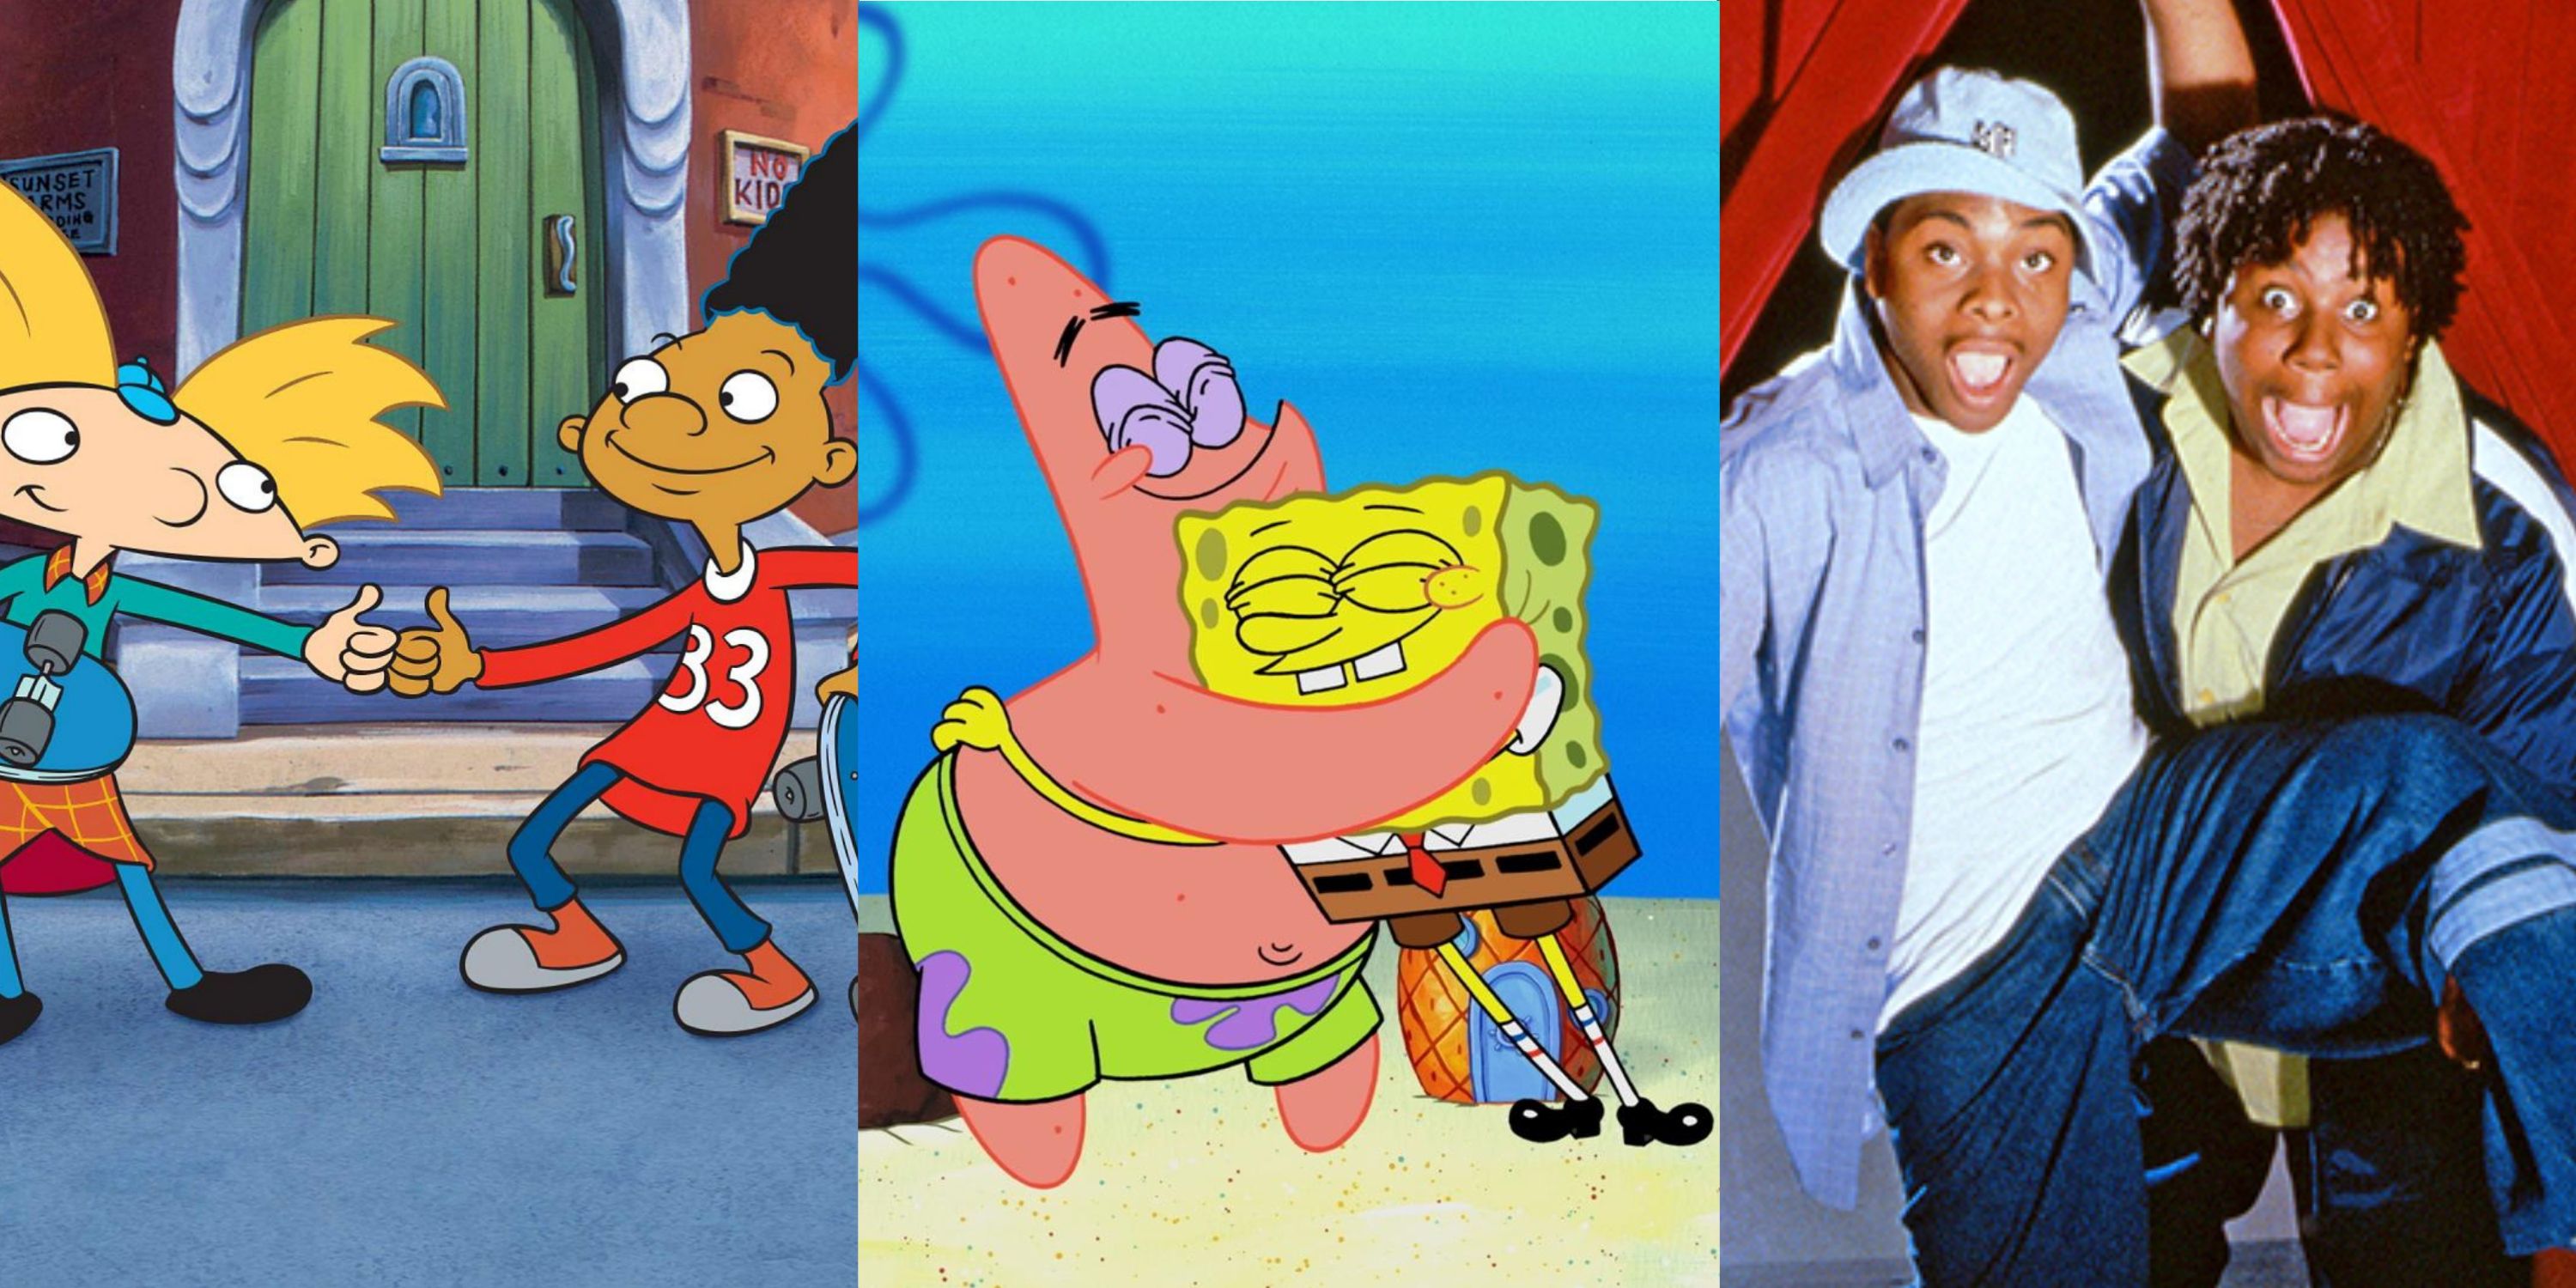 Split image of the friends from Hey Arnold, Spongebob Squarepants, Kenan & Kel